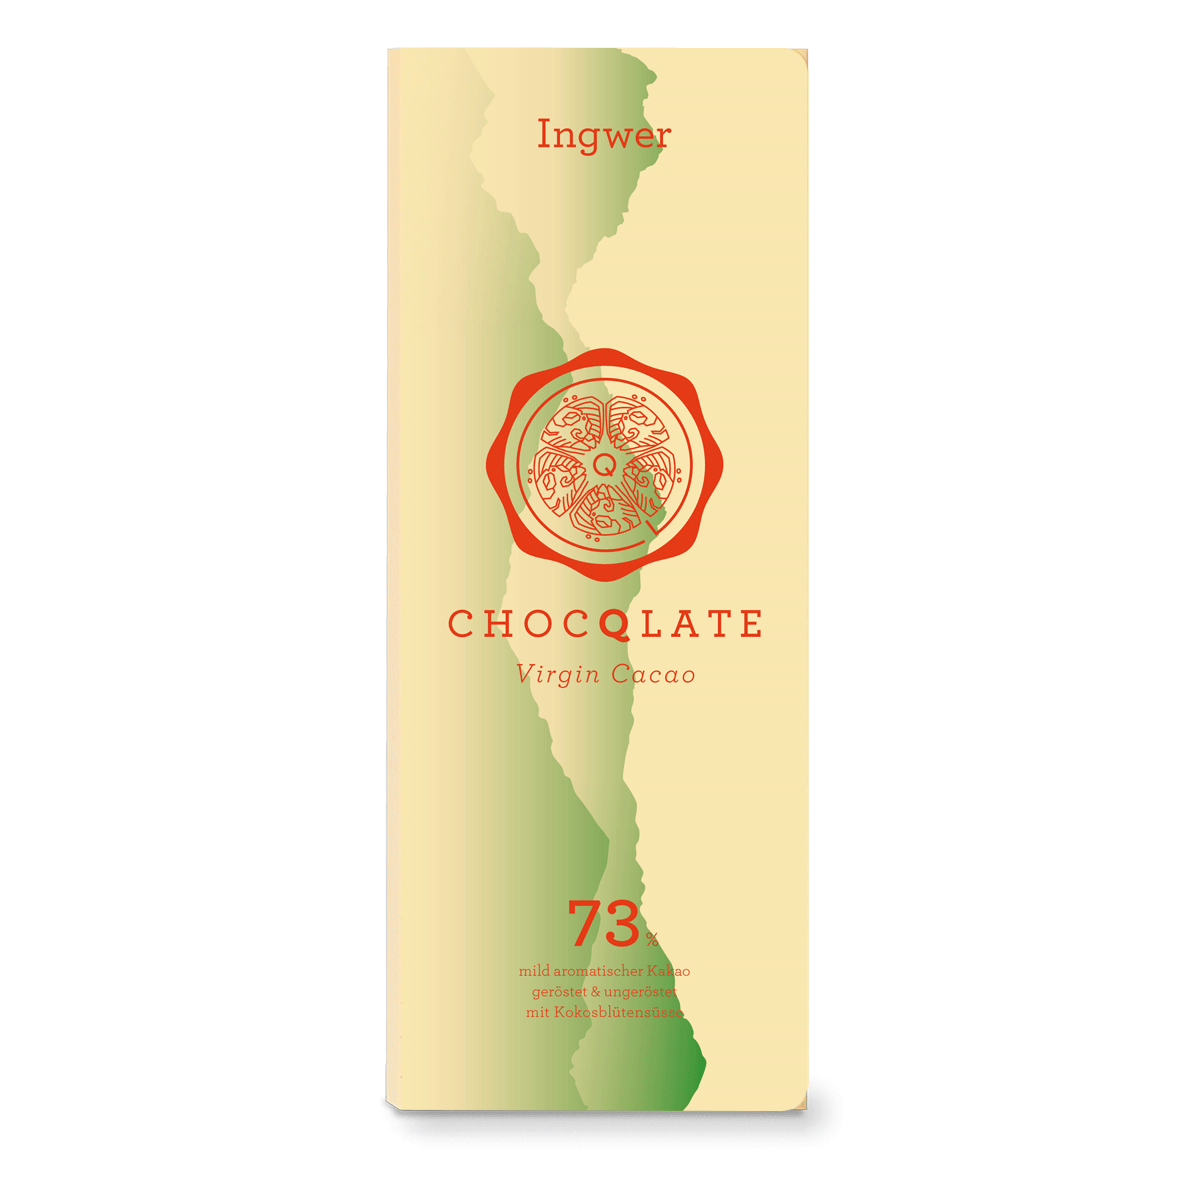 CHOCQLATE chocolat gingembre bio au cacao vierge